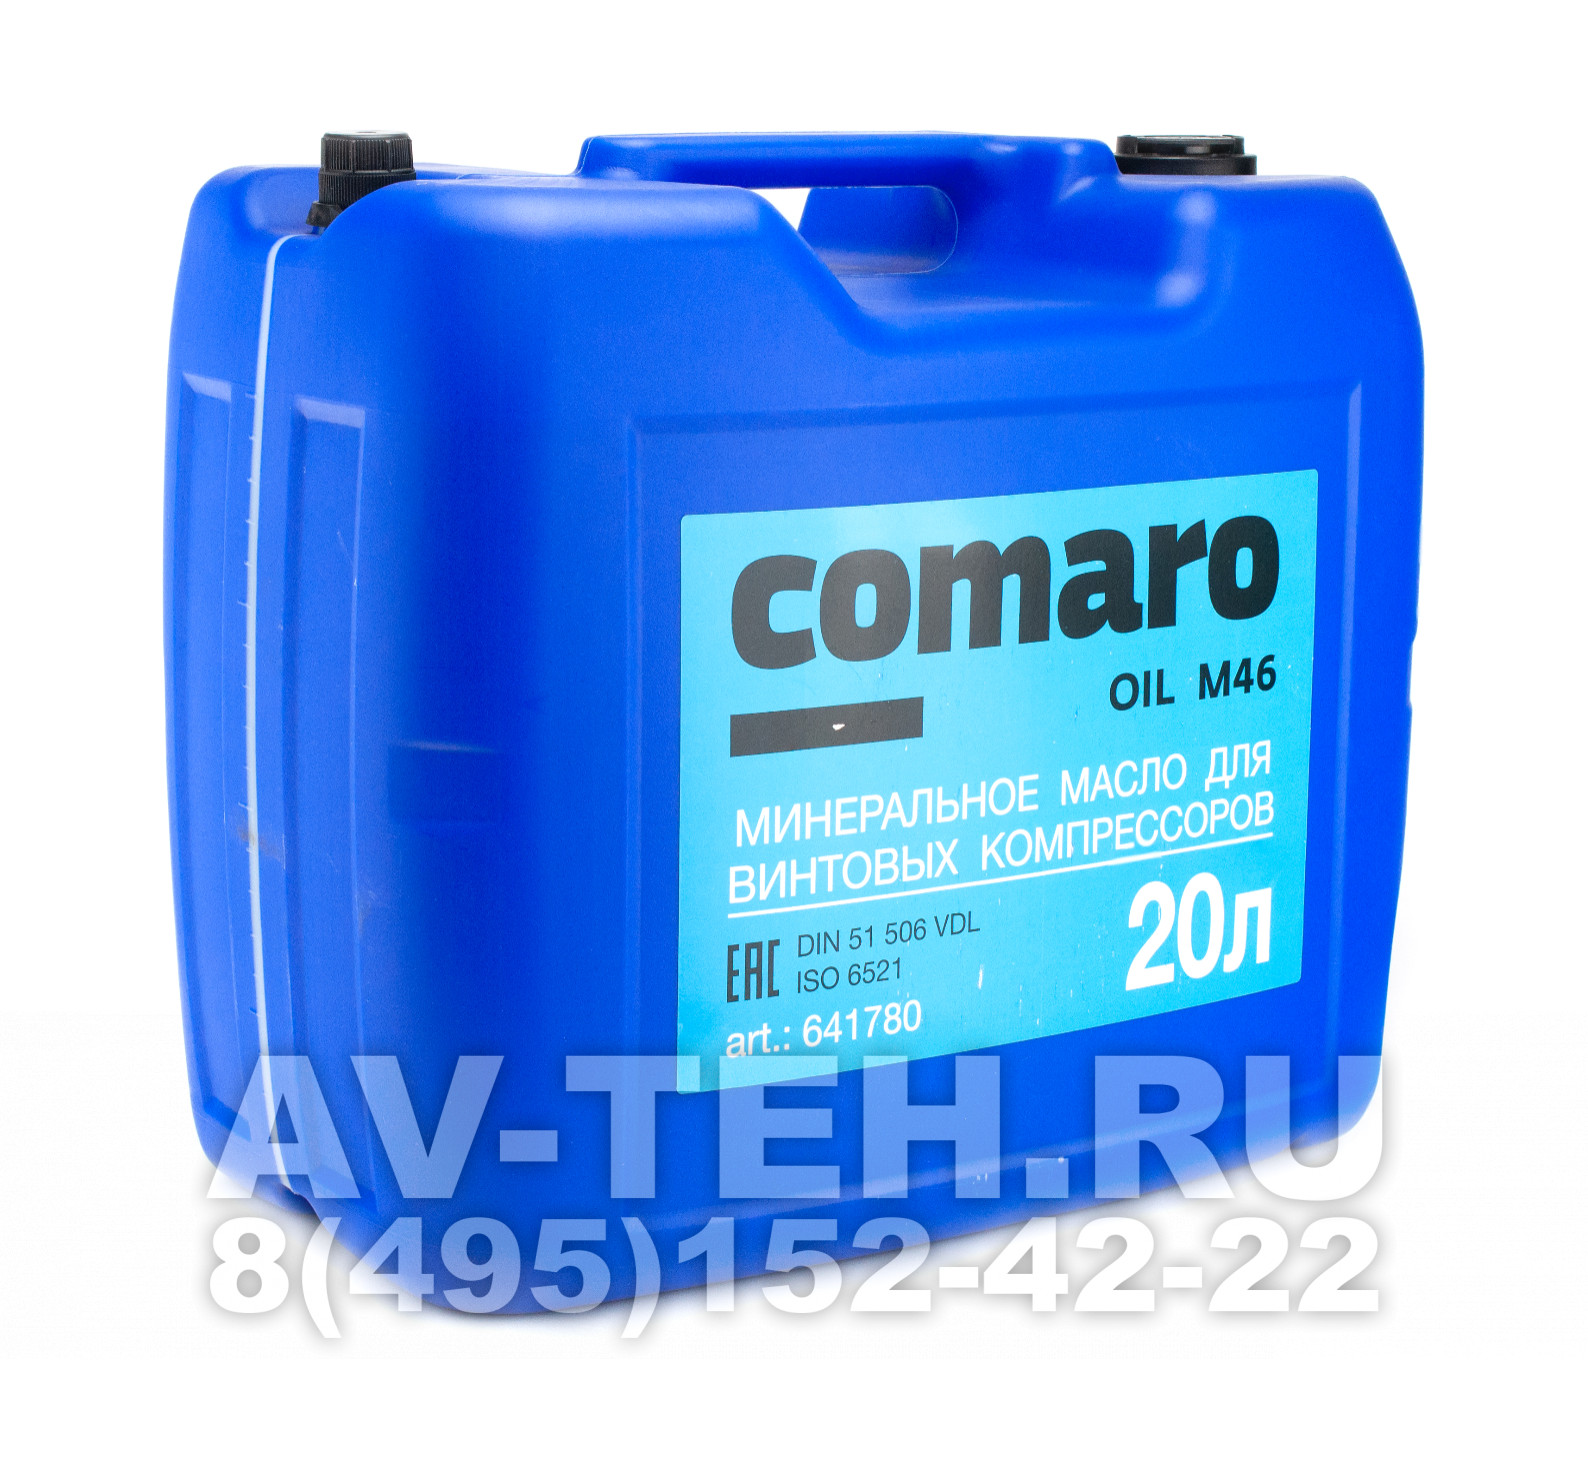 Компрессорное масло Comaro Oil M46 20L